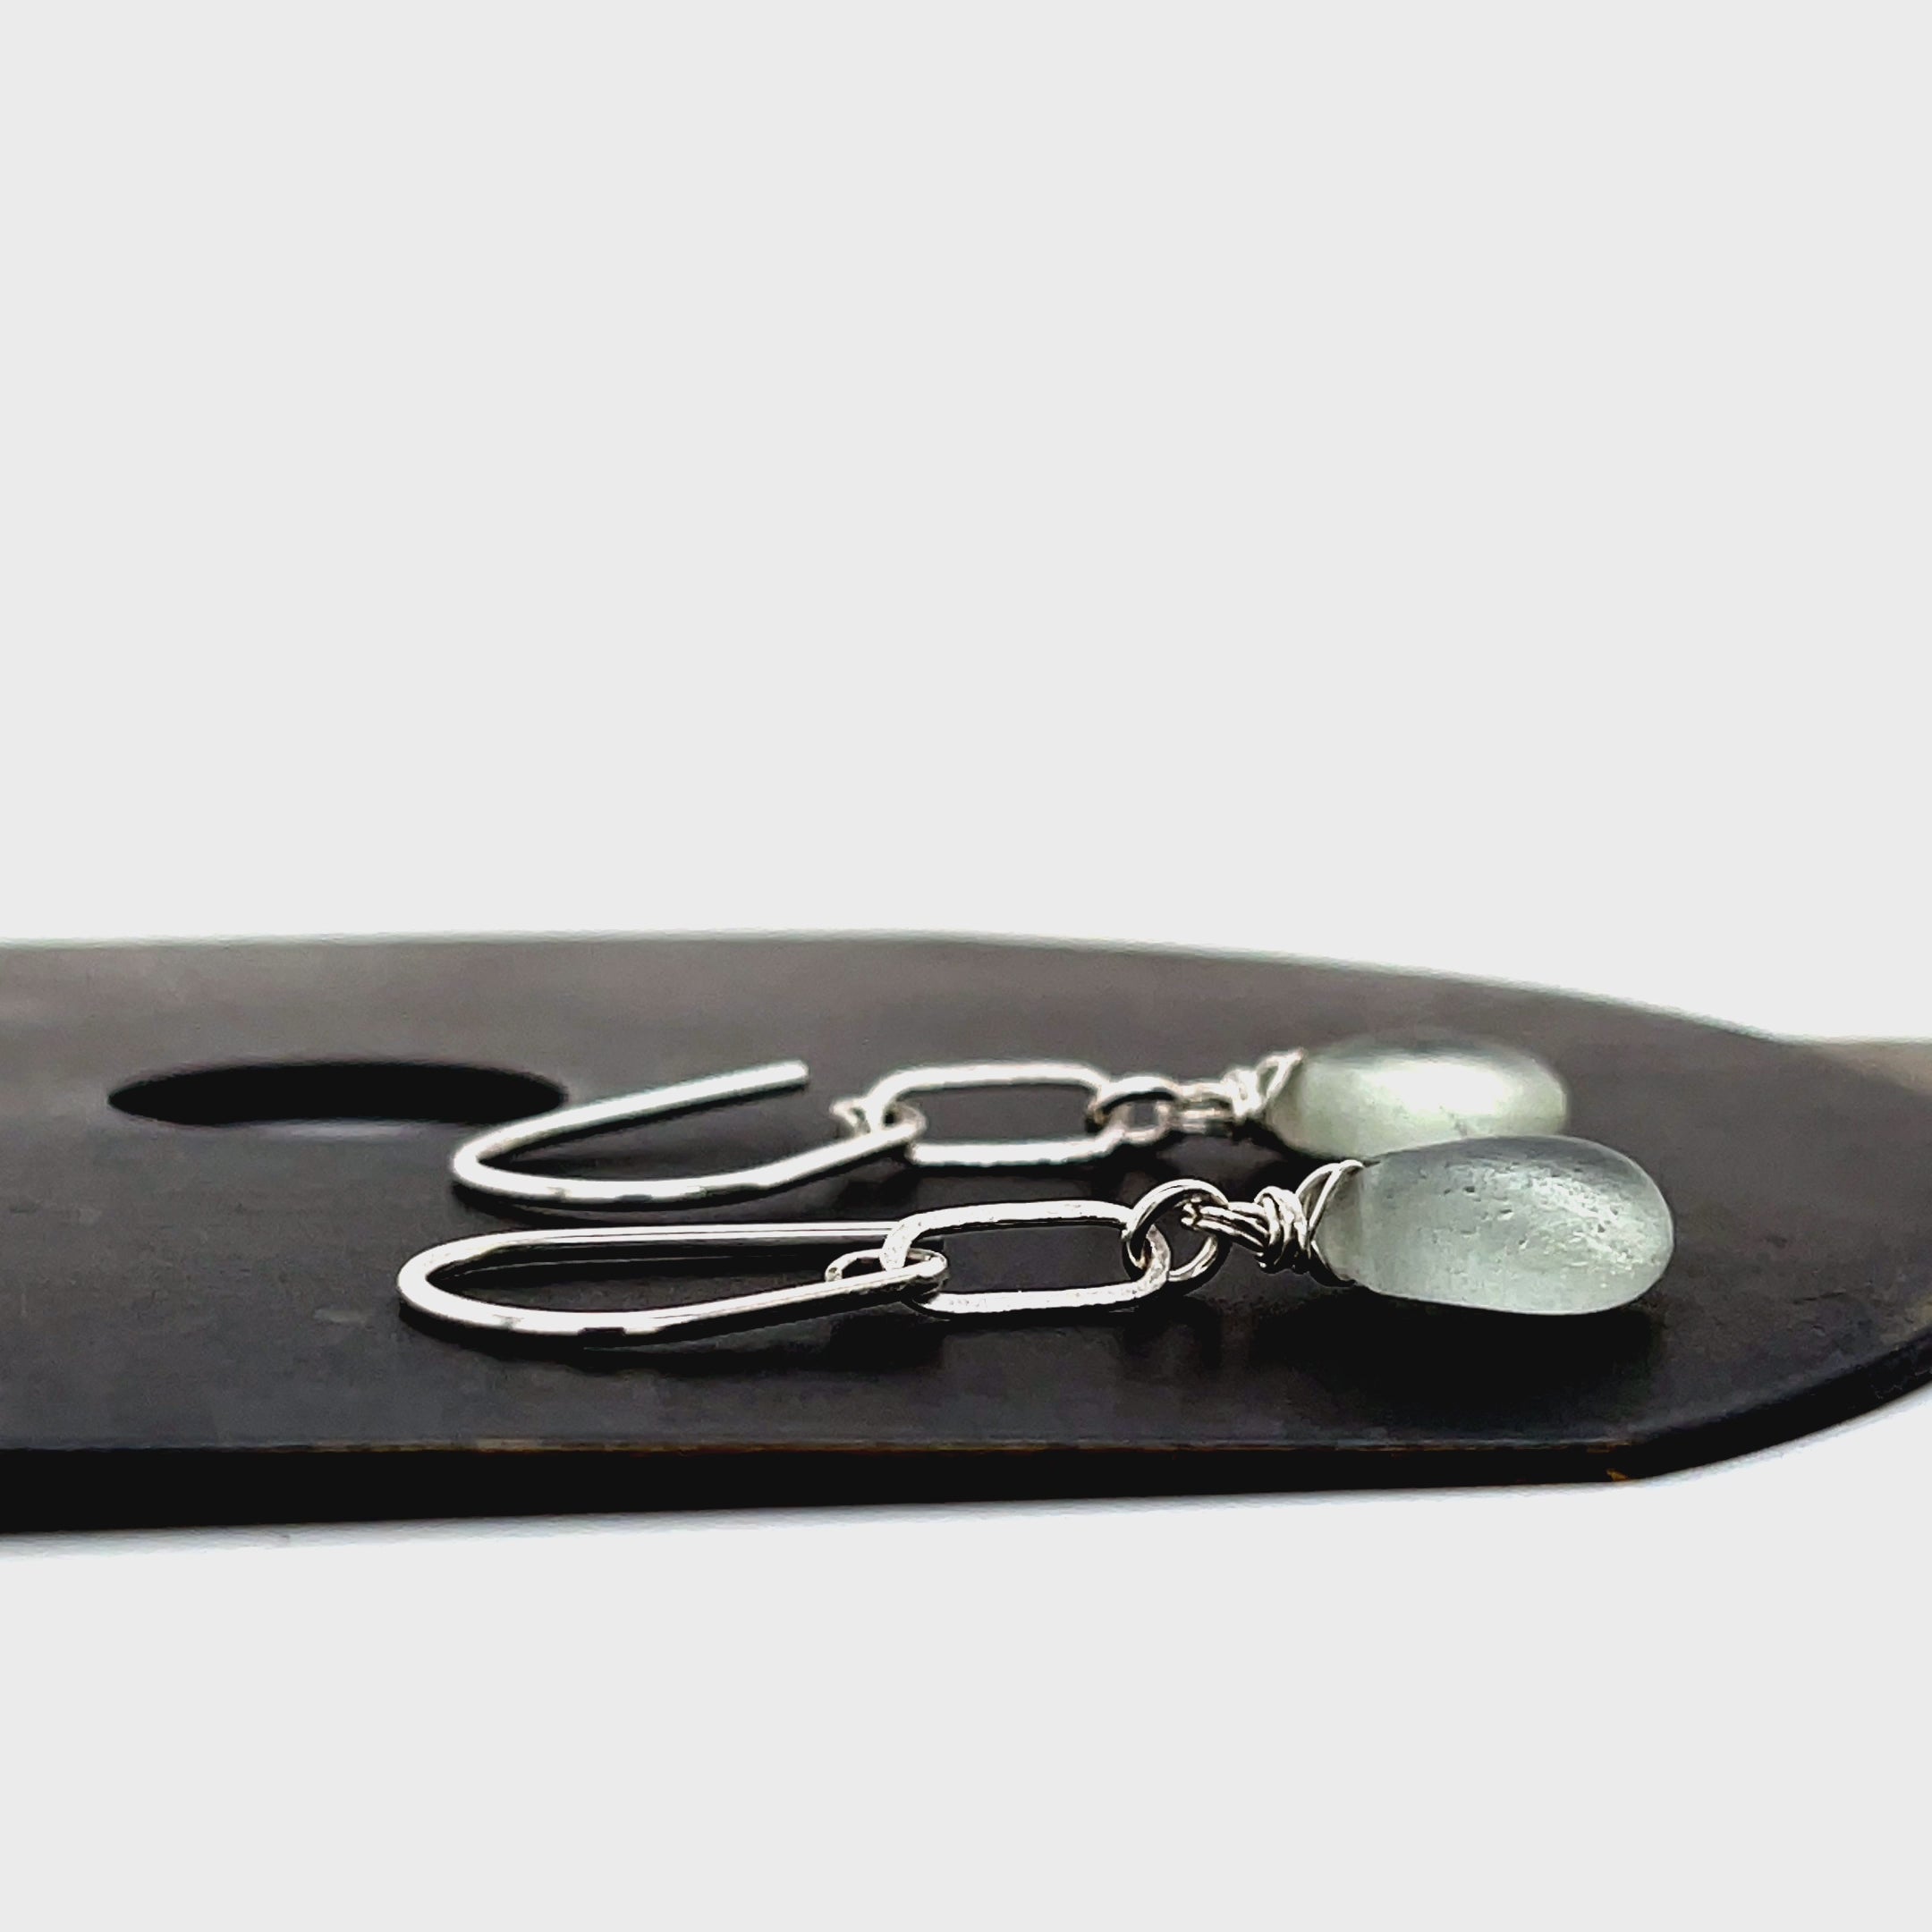 seaglass jewellery australia, handmade earrings silver, silver earrings online, rectangle earrings